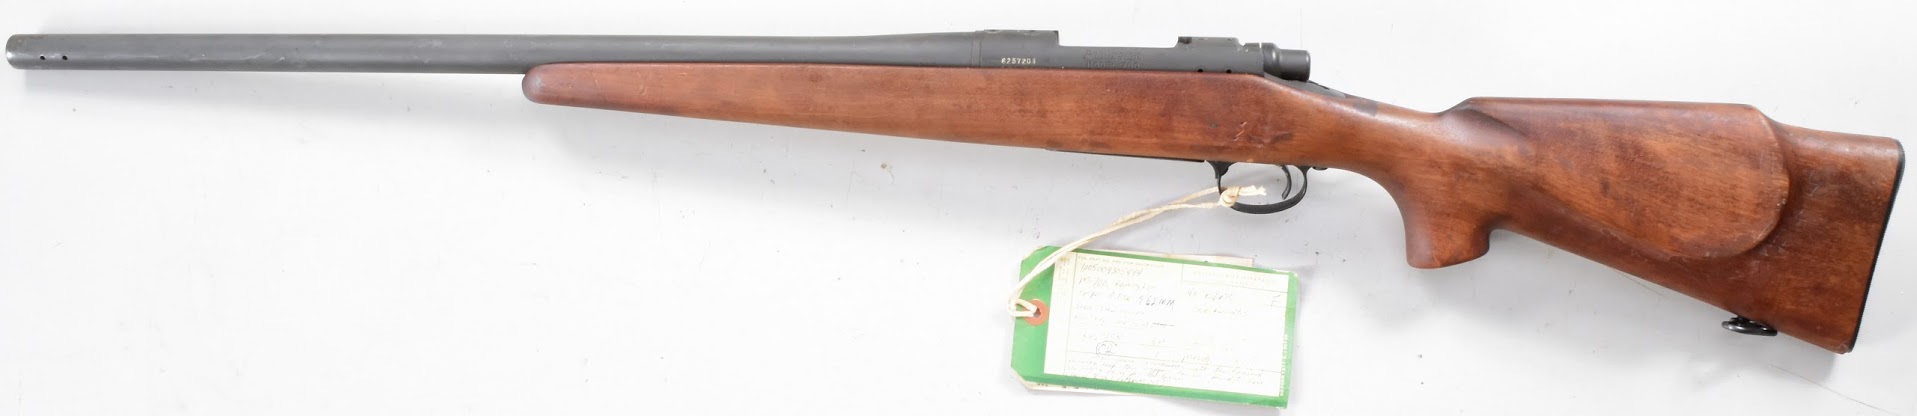 Remington Model 700 002.JPG